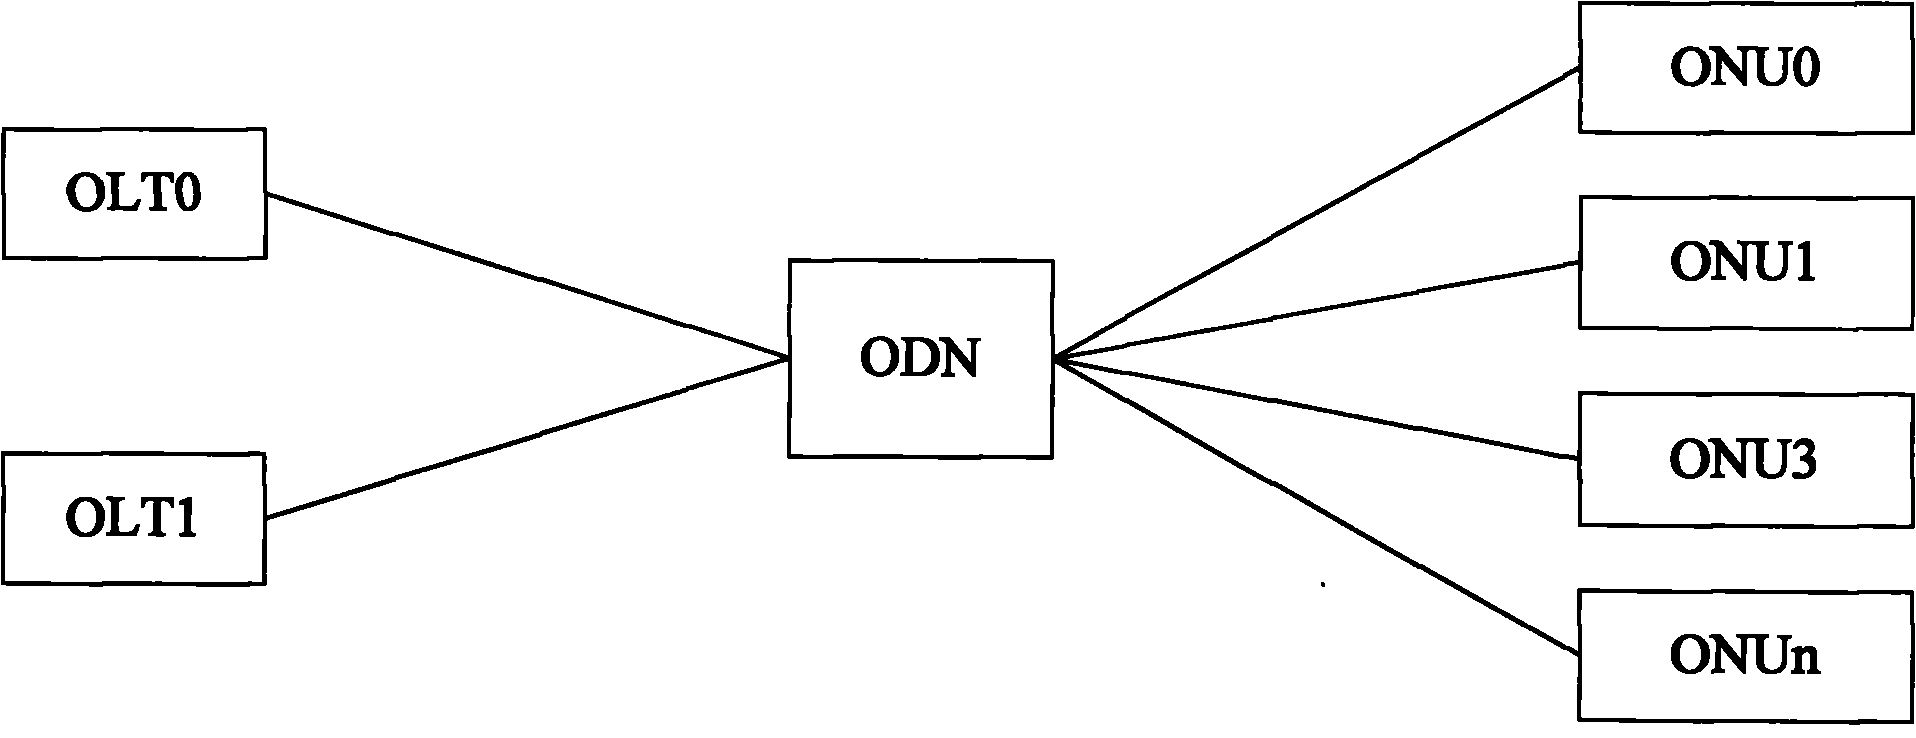 Method for distance measurement in gigabit passive optical network system